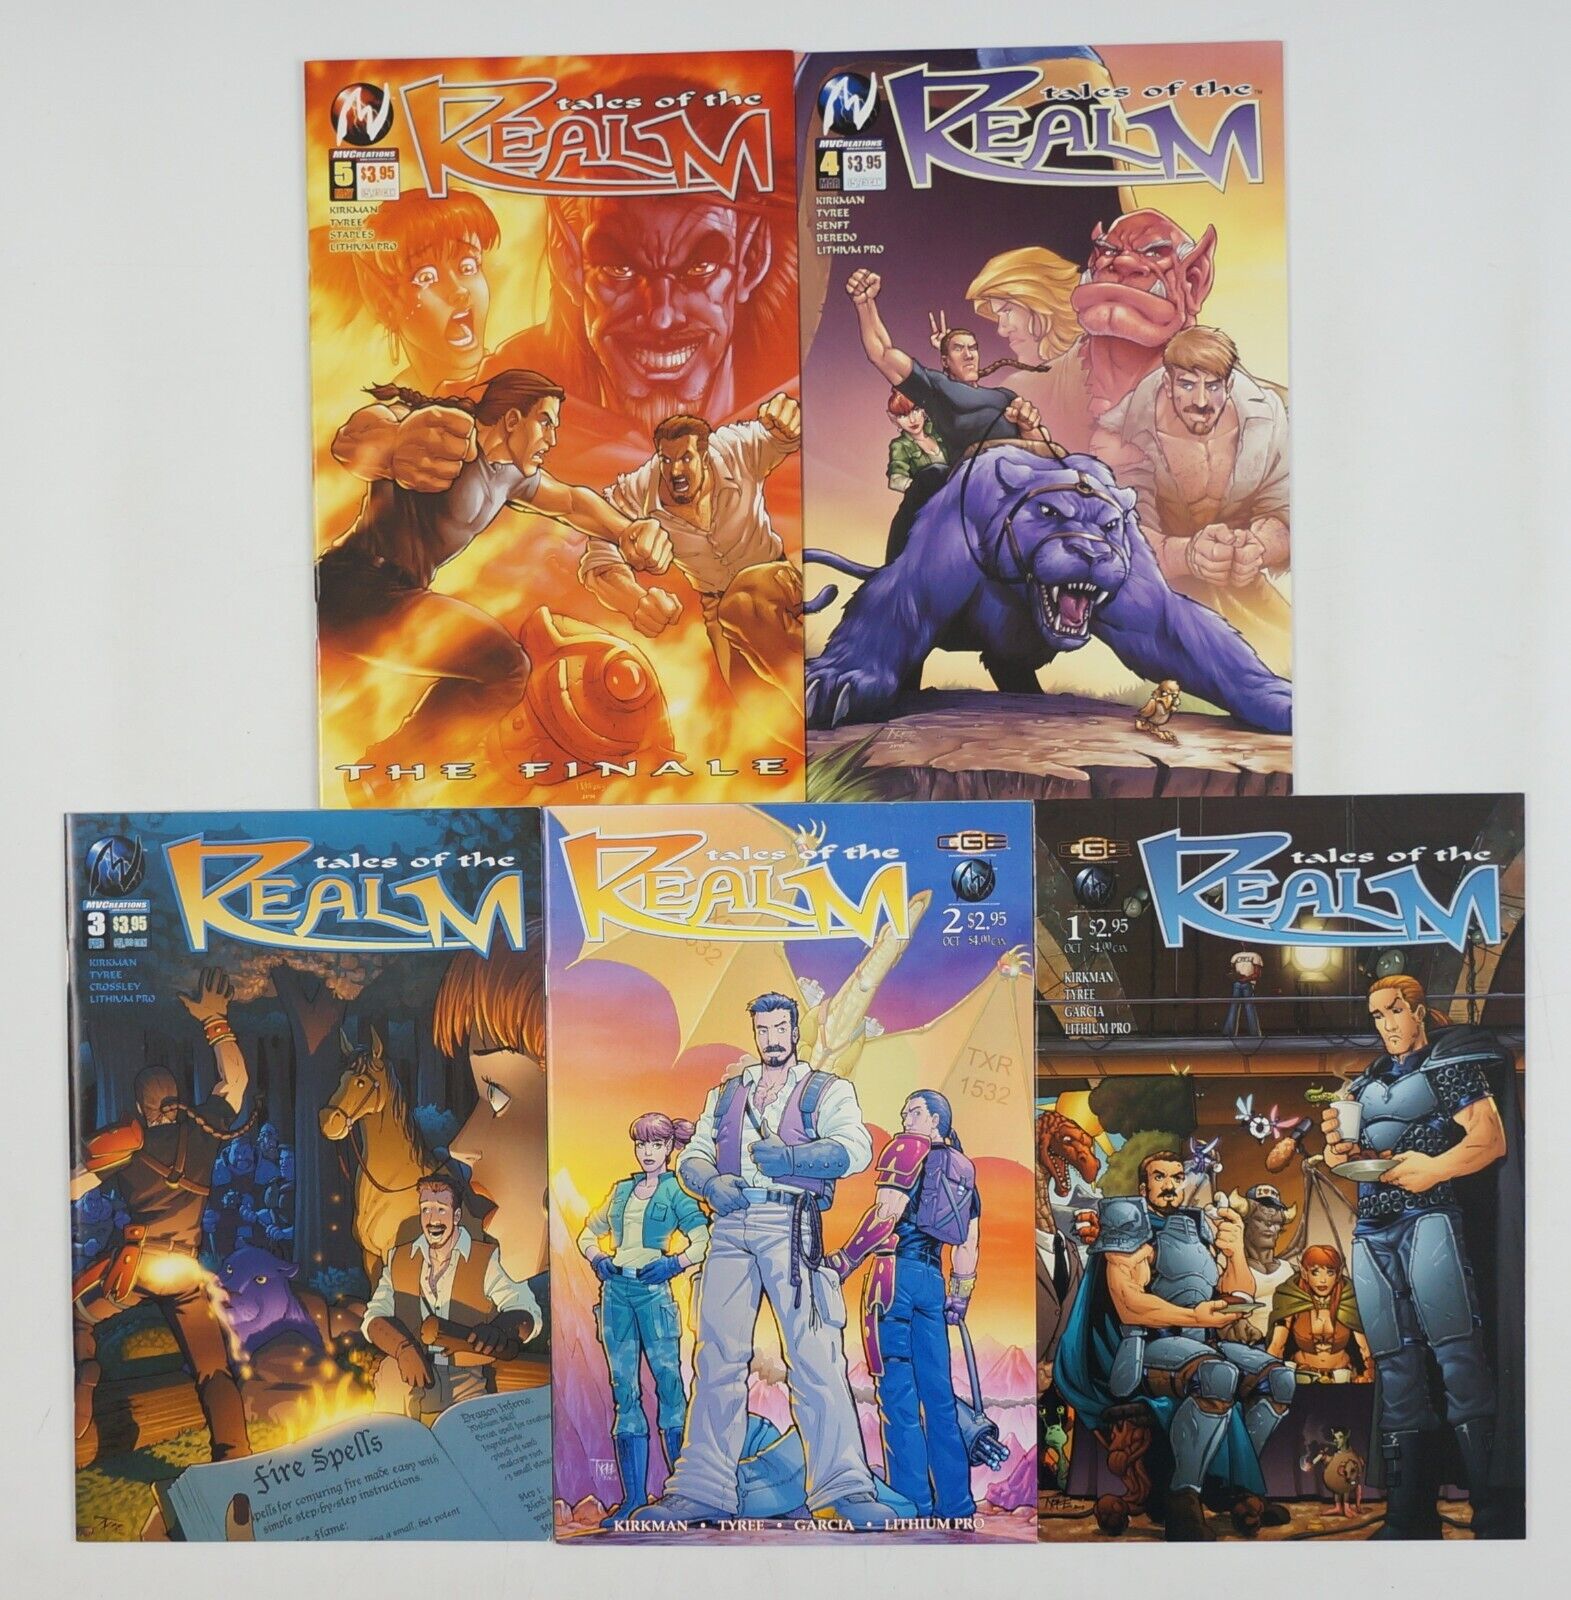 Tales of the Realm #1-5 VF/NM complete series Robert Kirkman Crossgen 2003 set